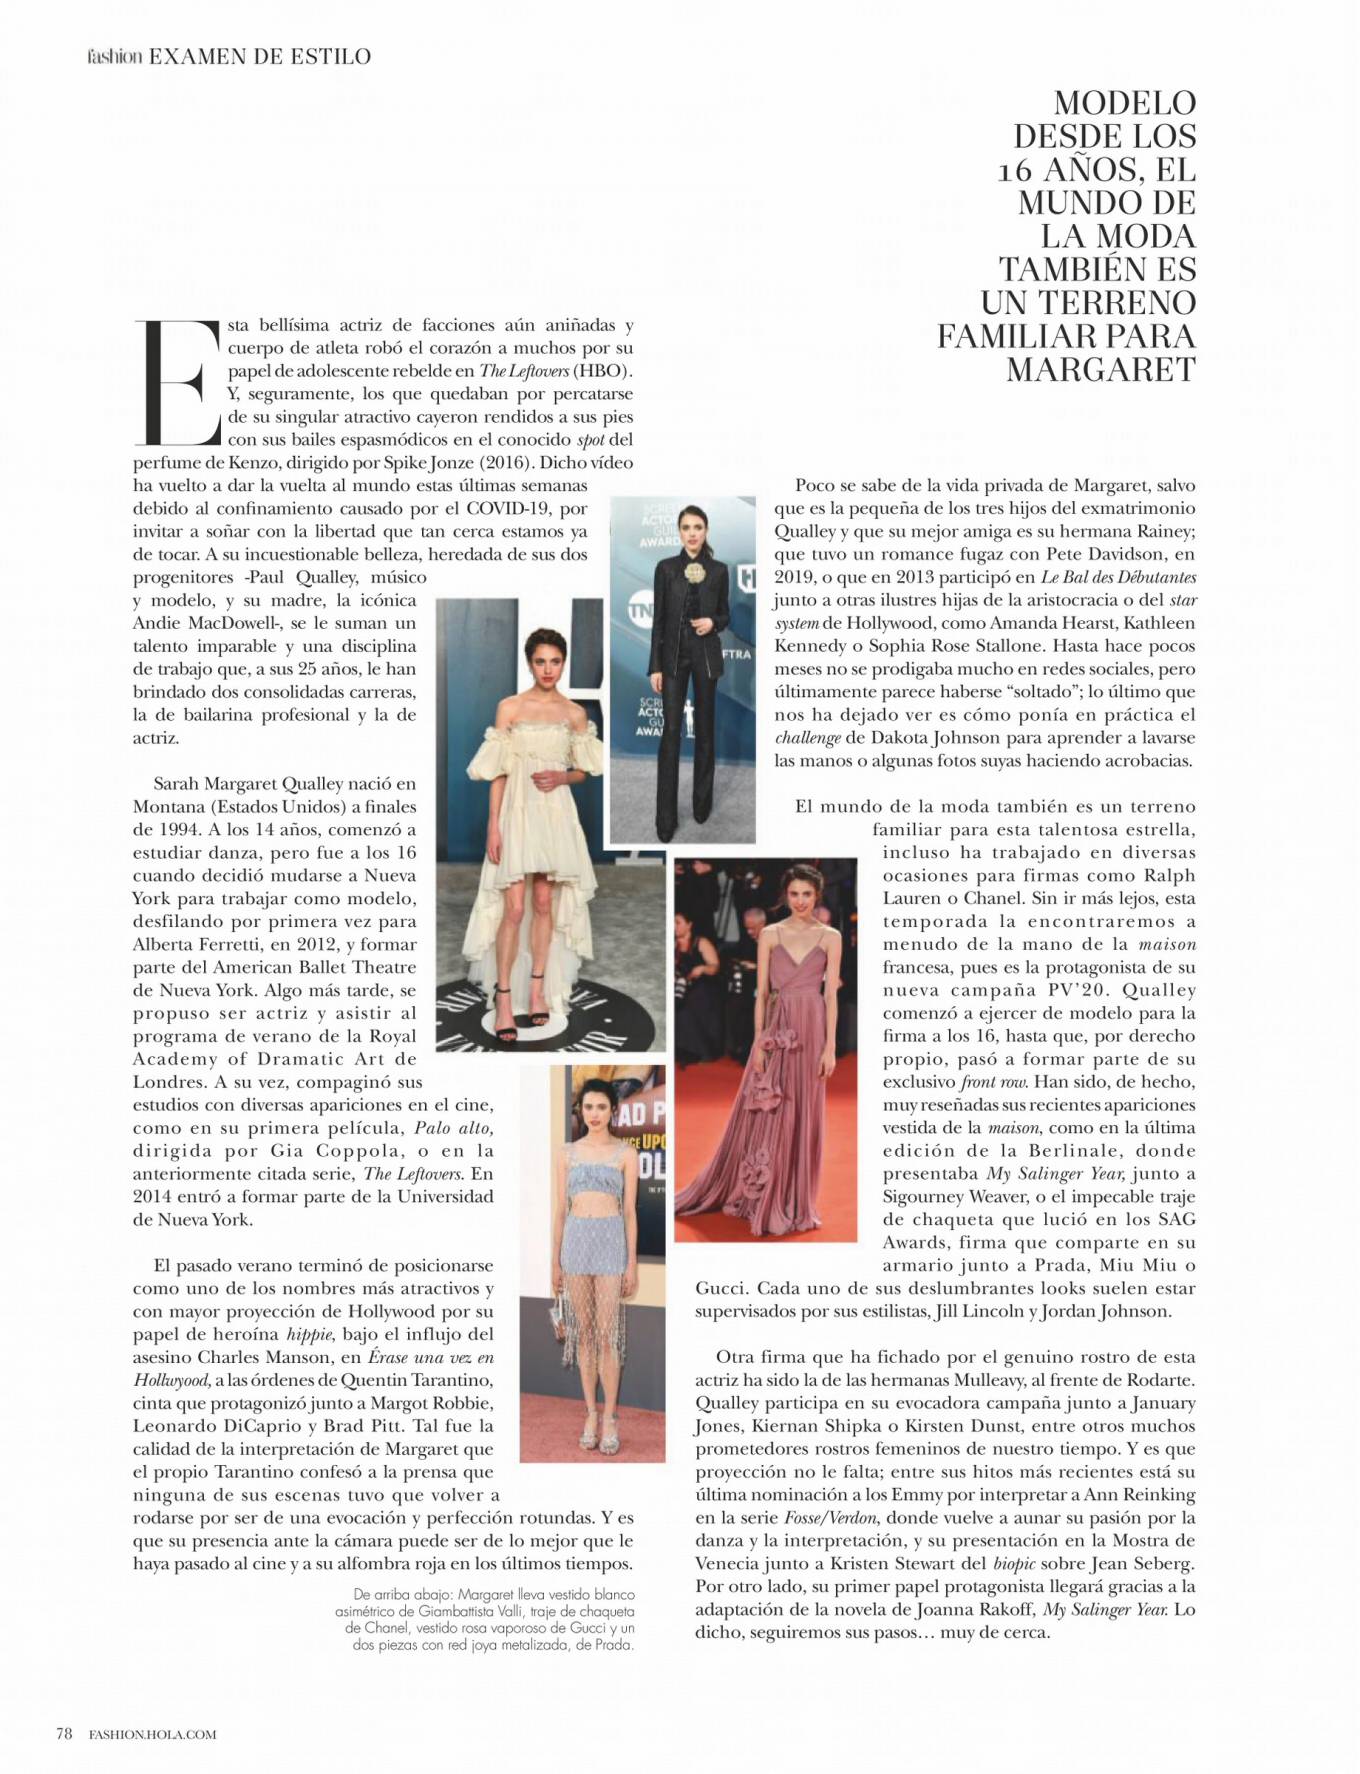 Margaret Qualley 2020 : Margaret Qualley – HOLA Fashion Magazine 2020-01